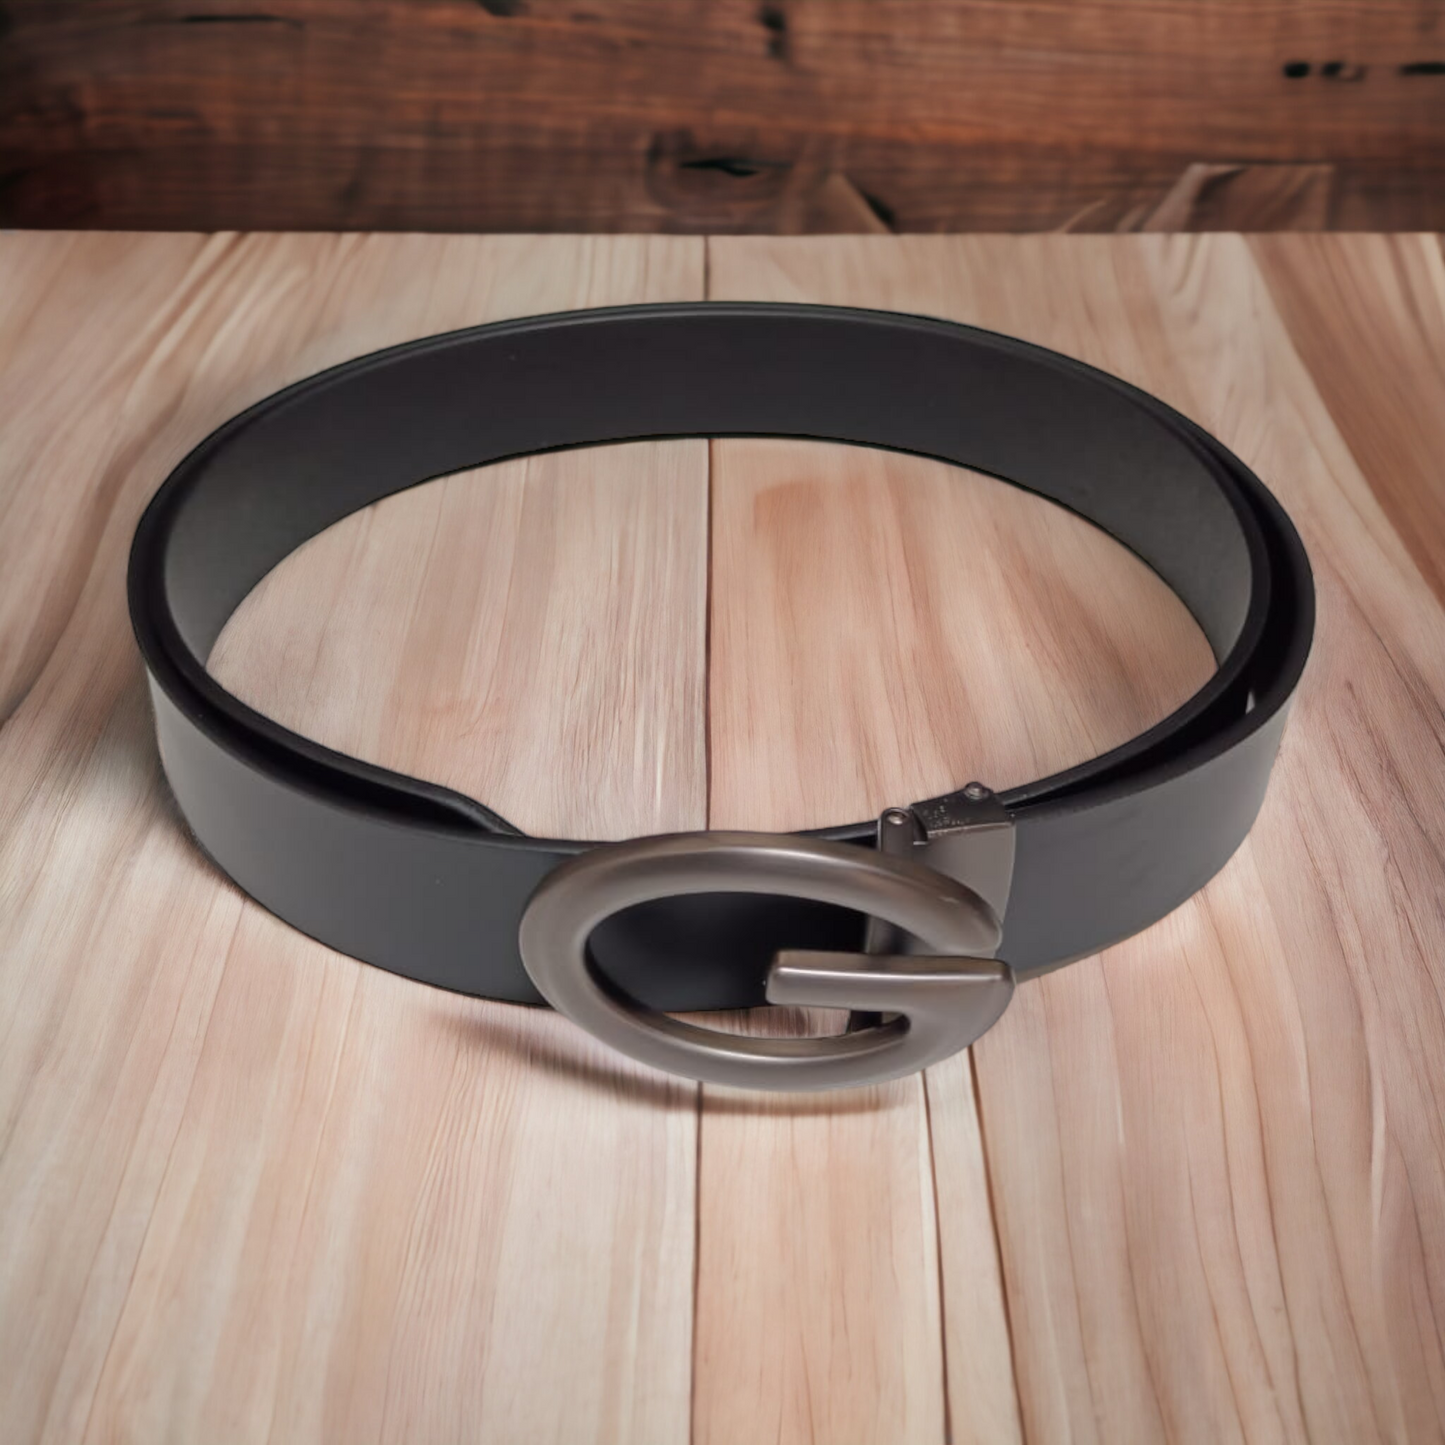 Men's Fashion Pin Buckle Black Belt Size (28-40) 35mm Belt